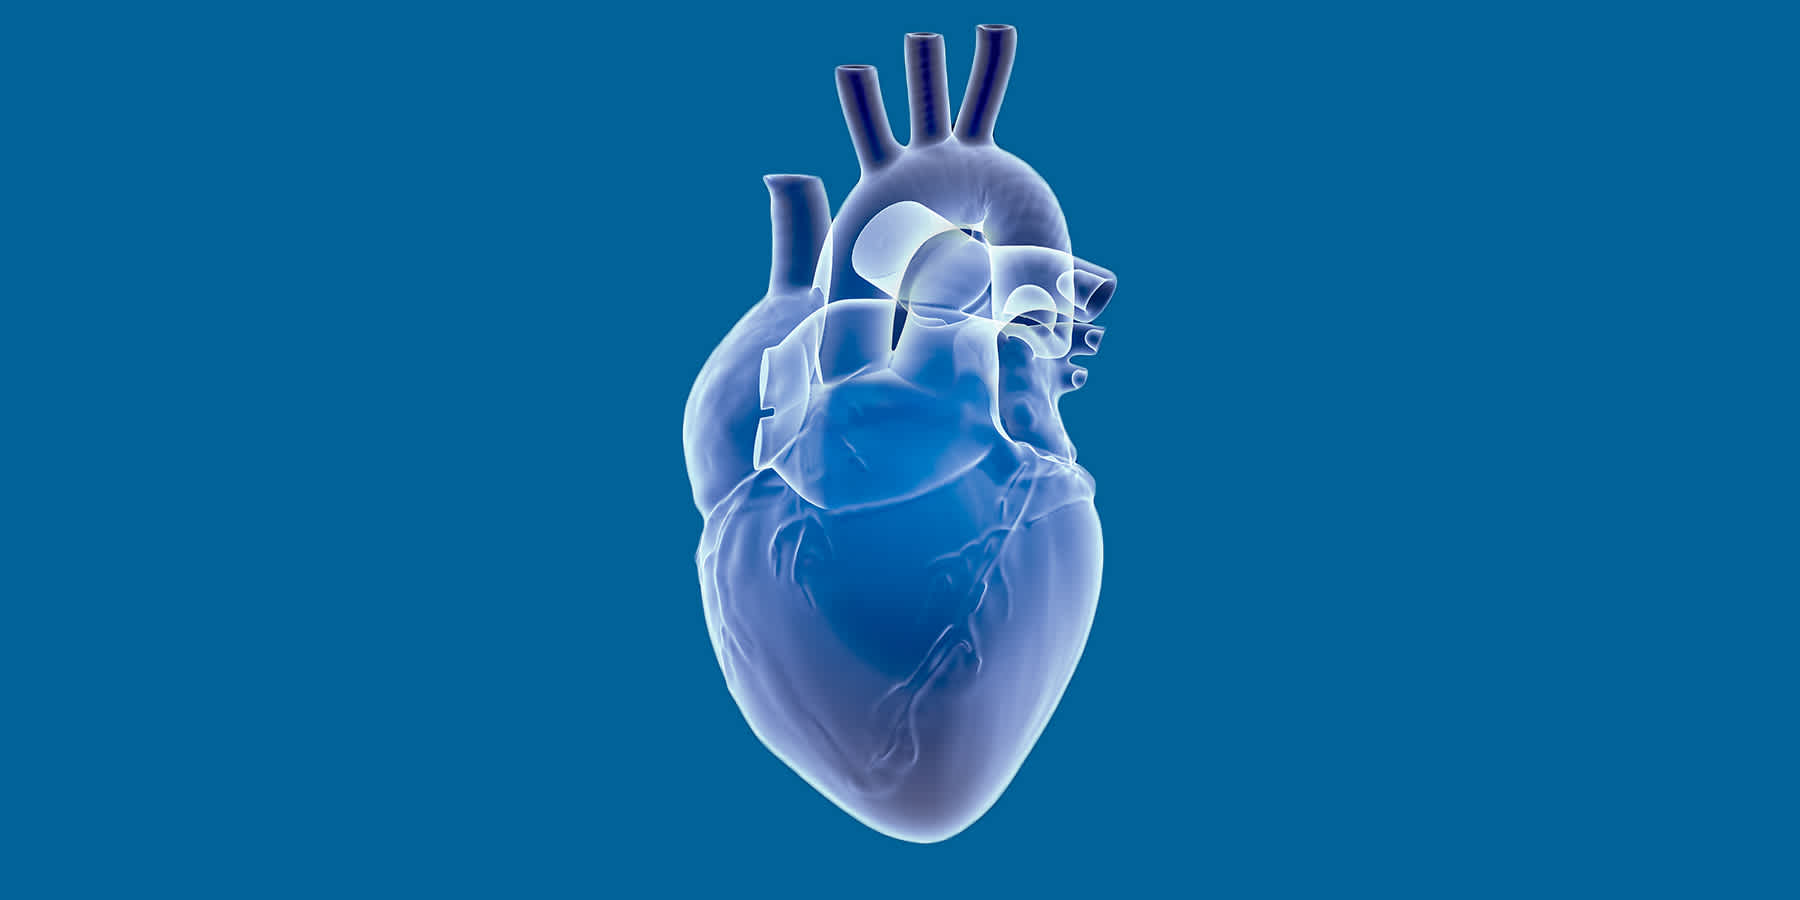 Illustration of anatomical heart against blue background